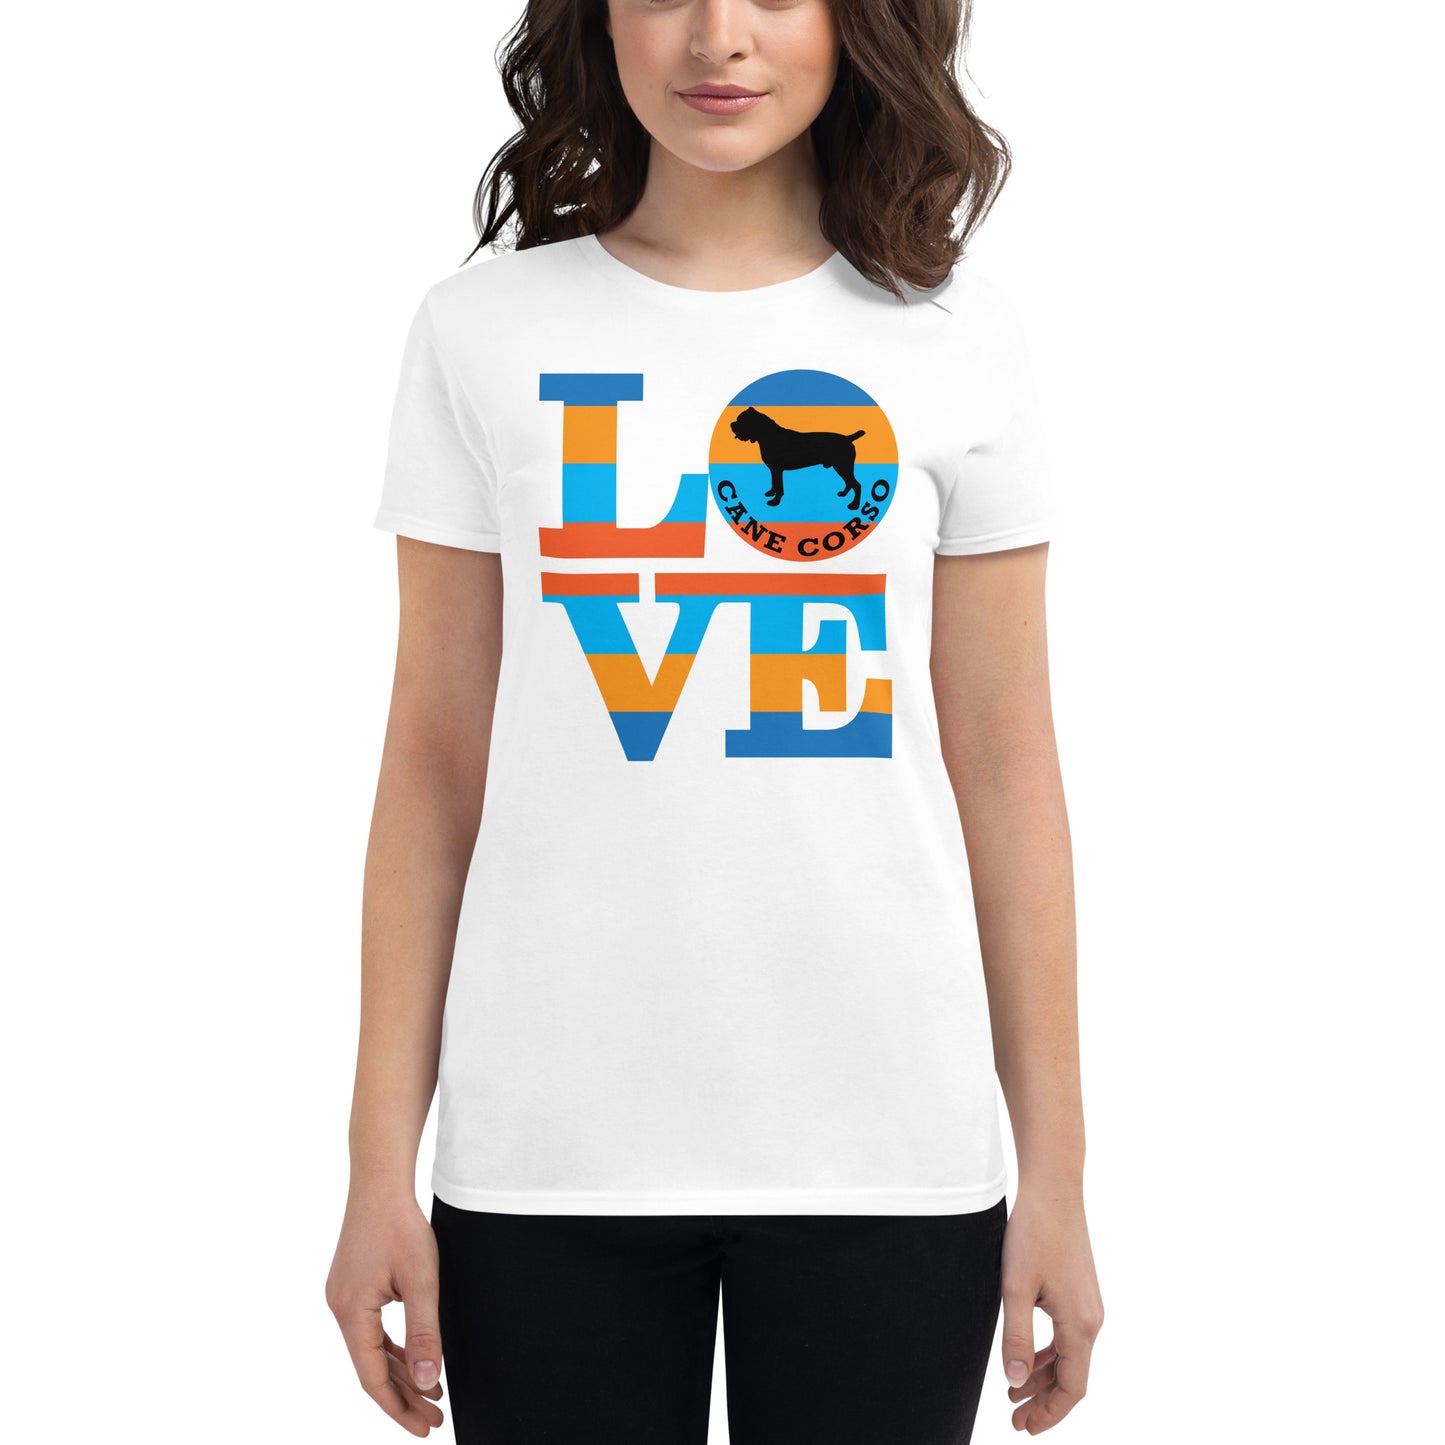 Love Cane Corso Women's short sleeve t-shirt